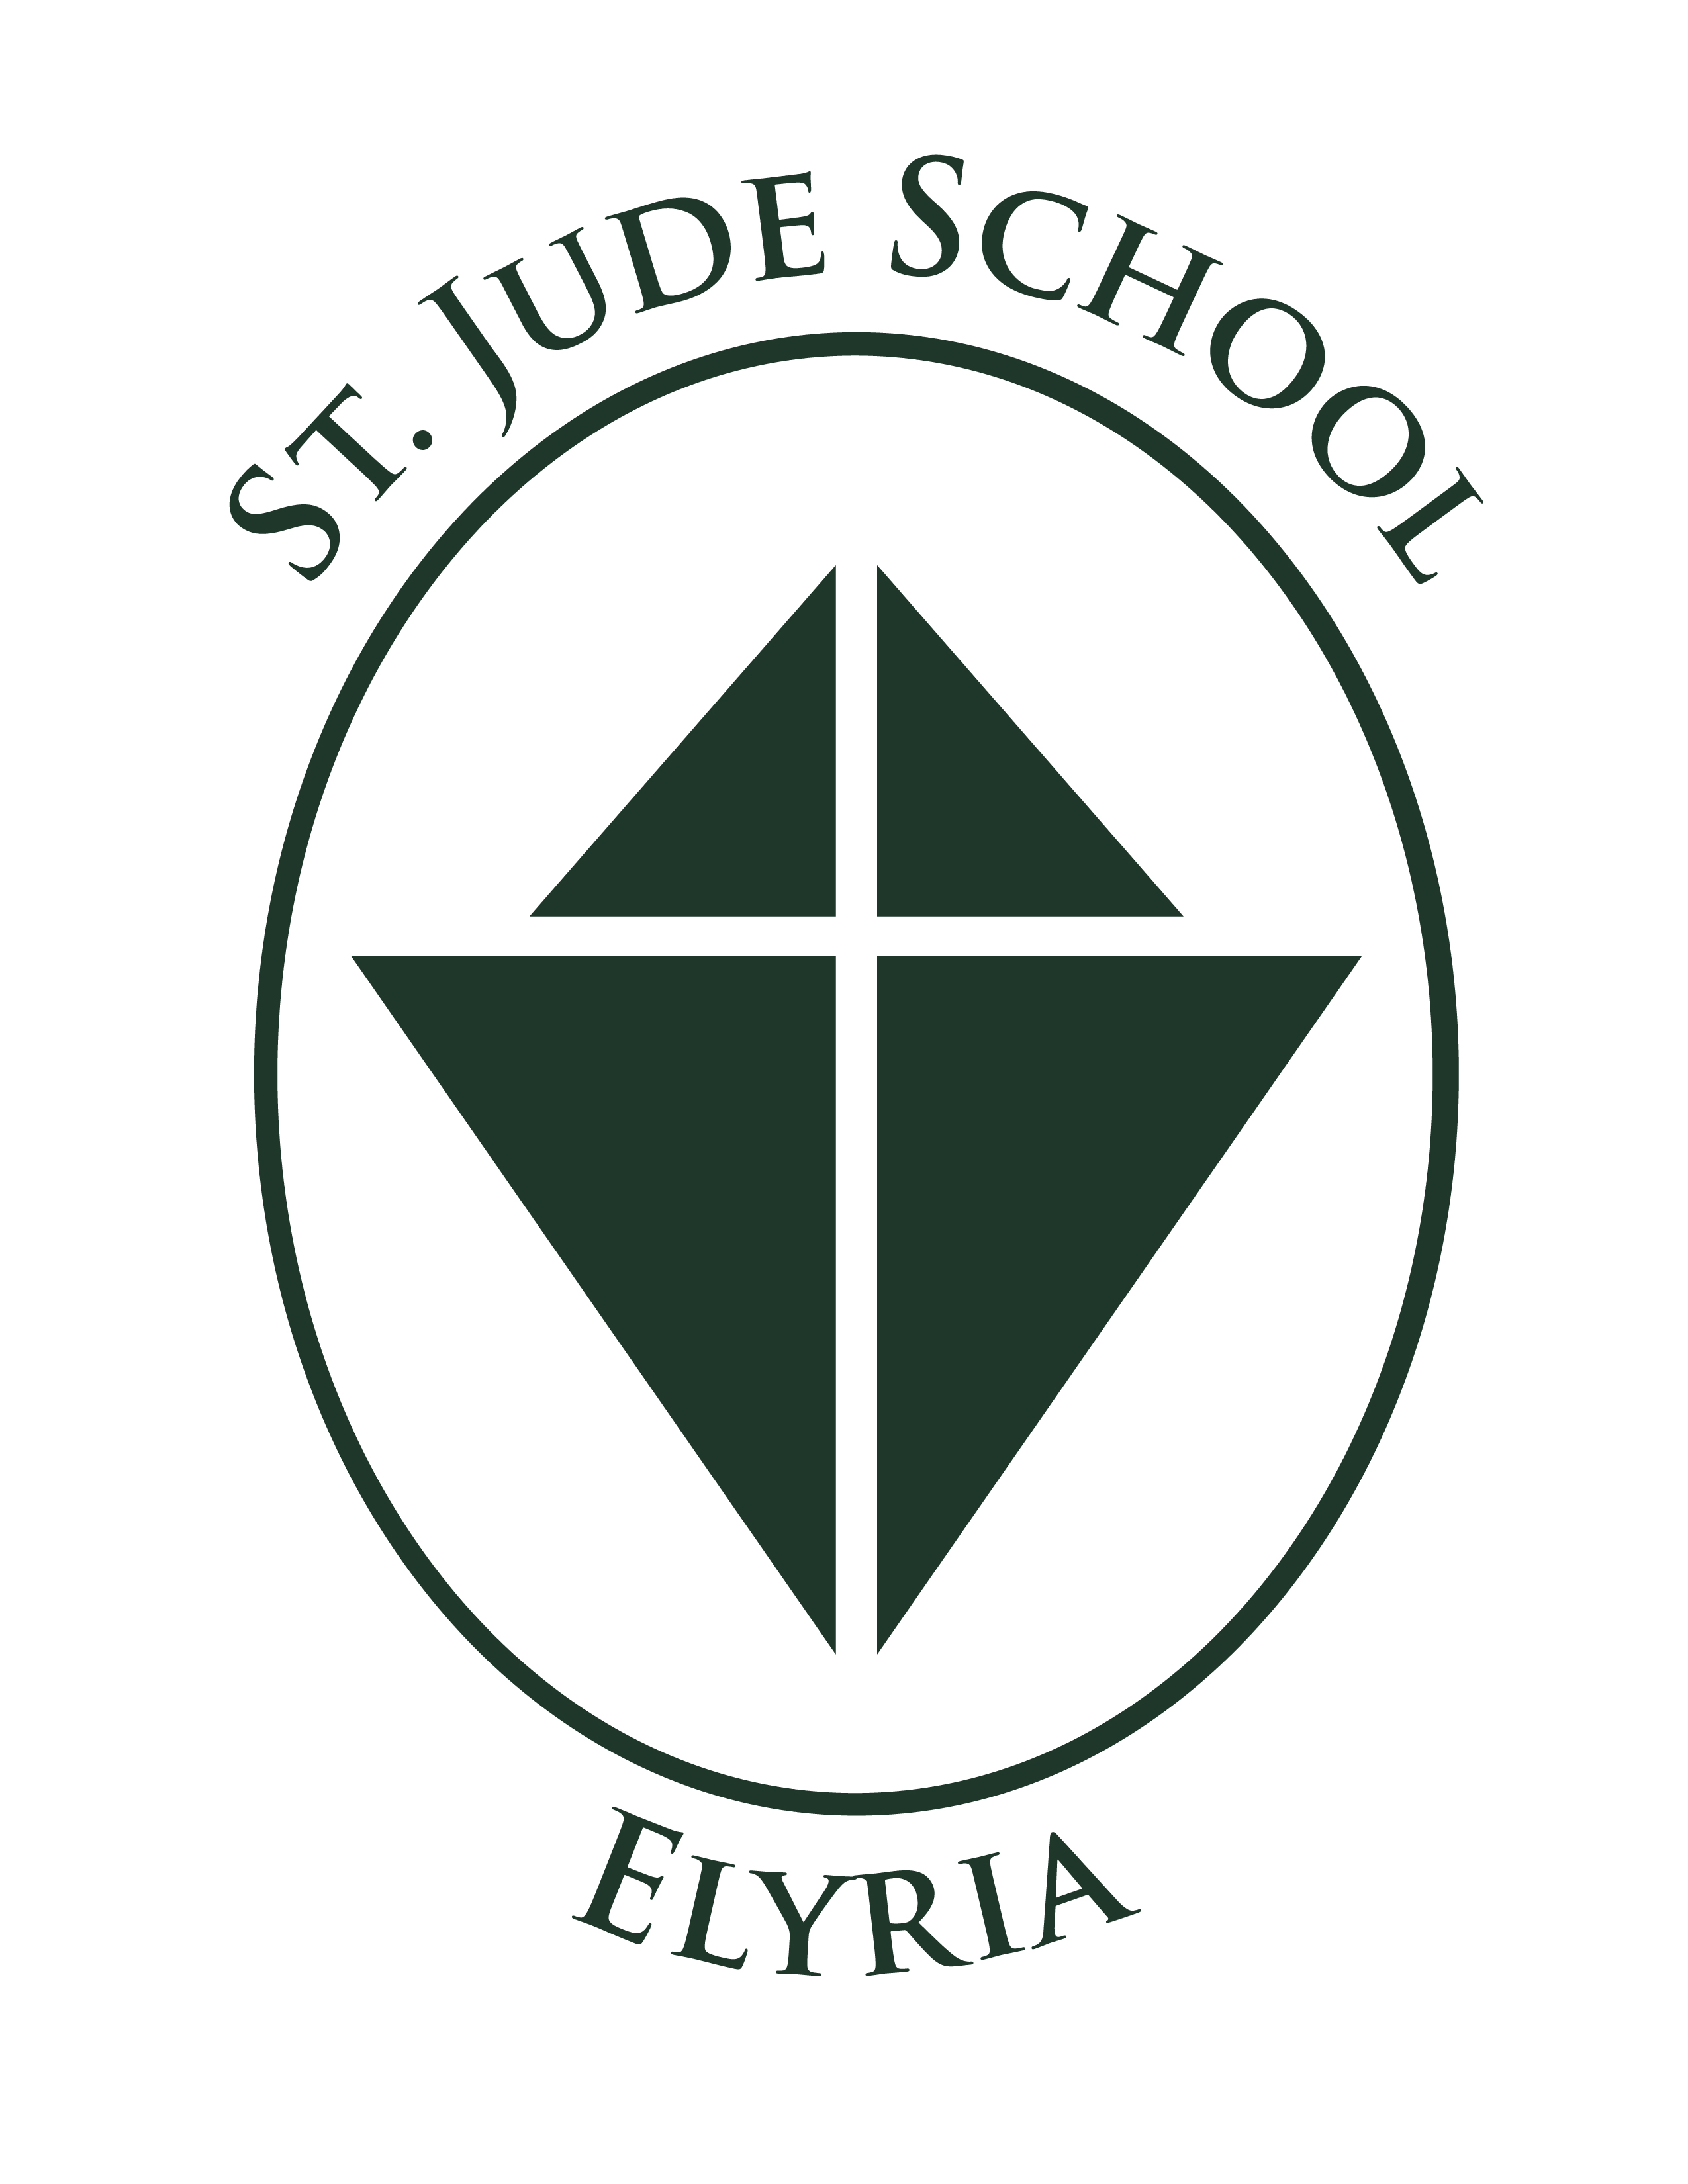 St Jude School logo